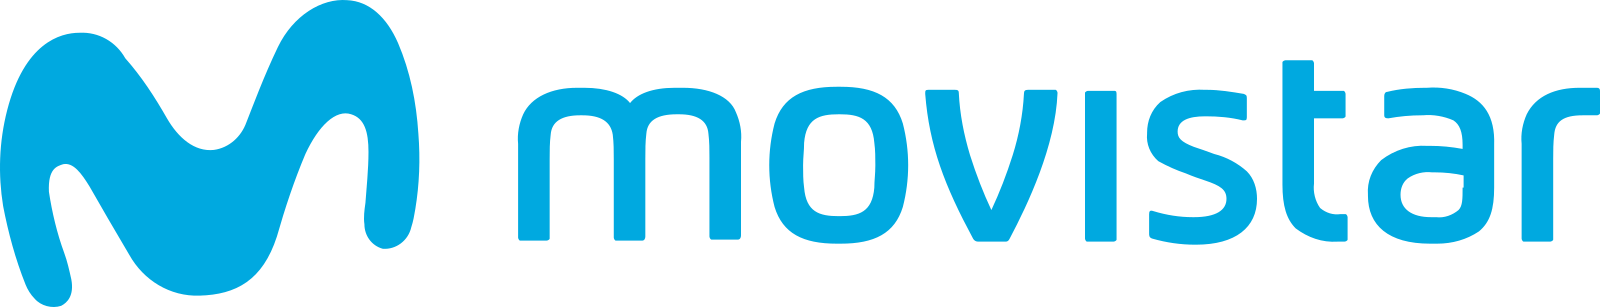 movistar-logo-2